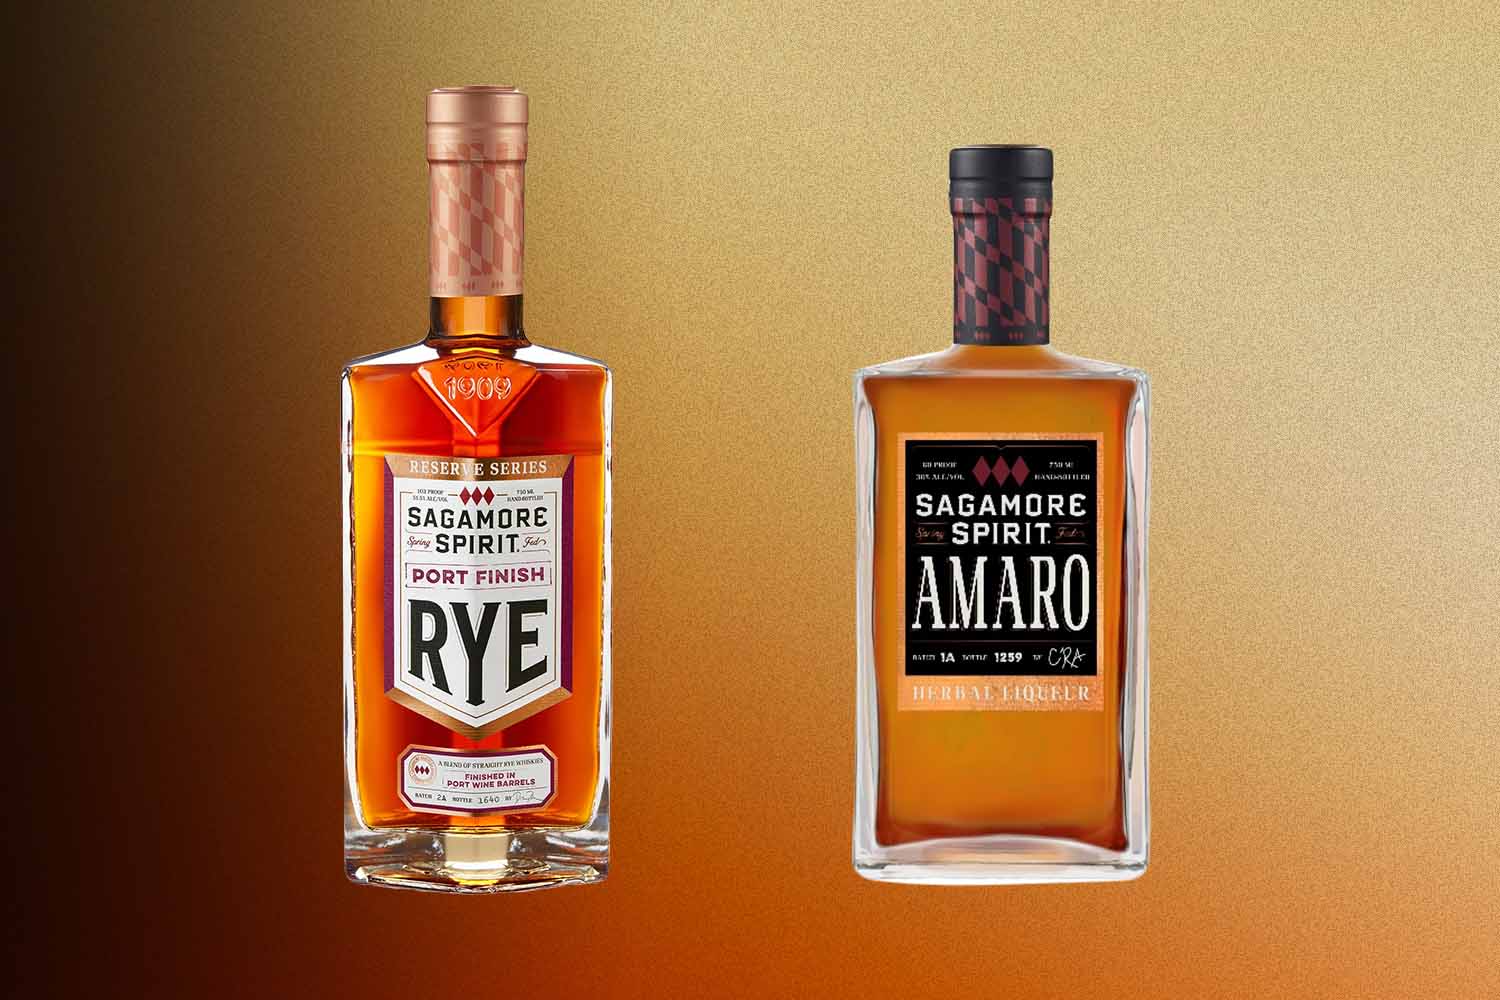 Sagamore Spirit Port Finish Rye and Amaro